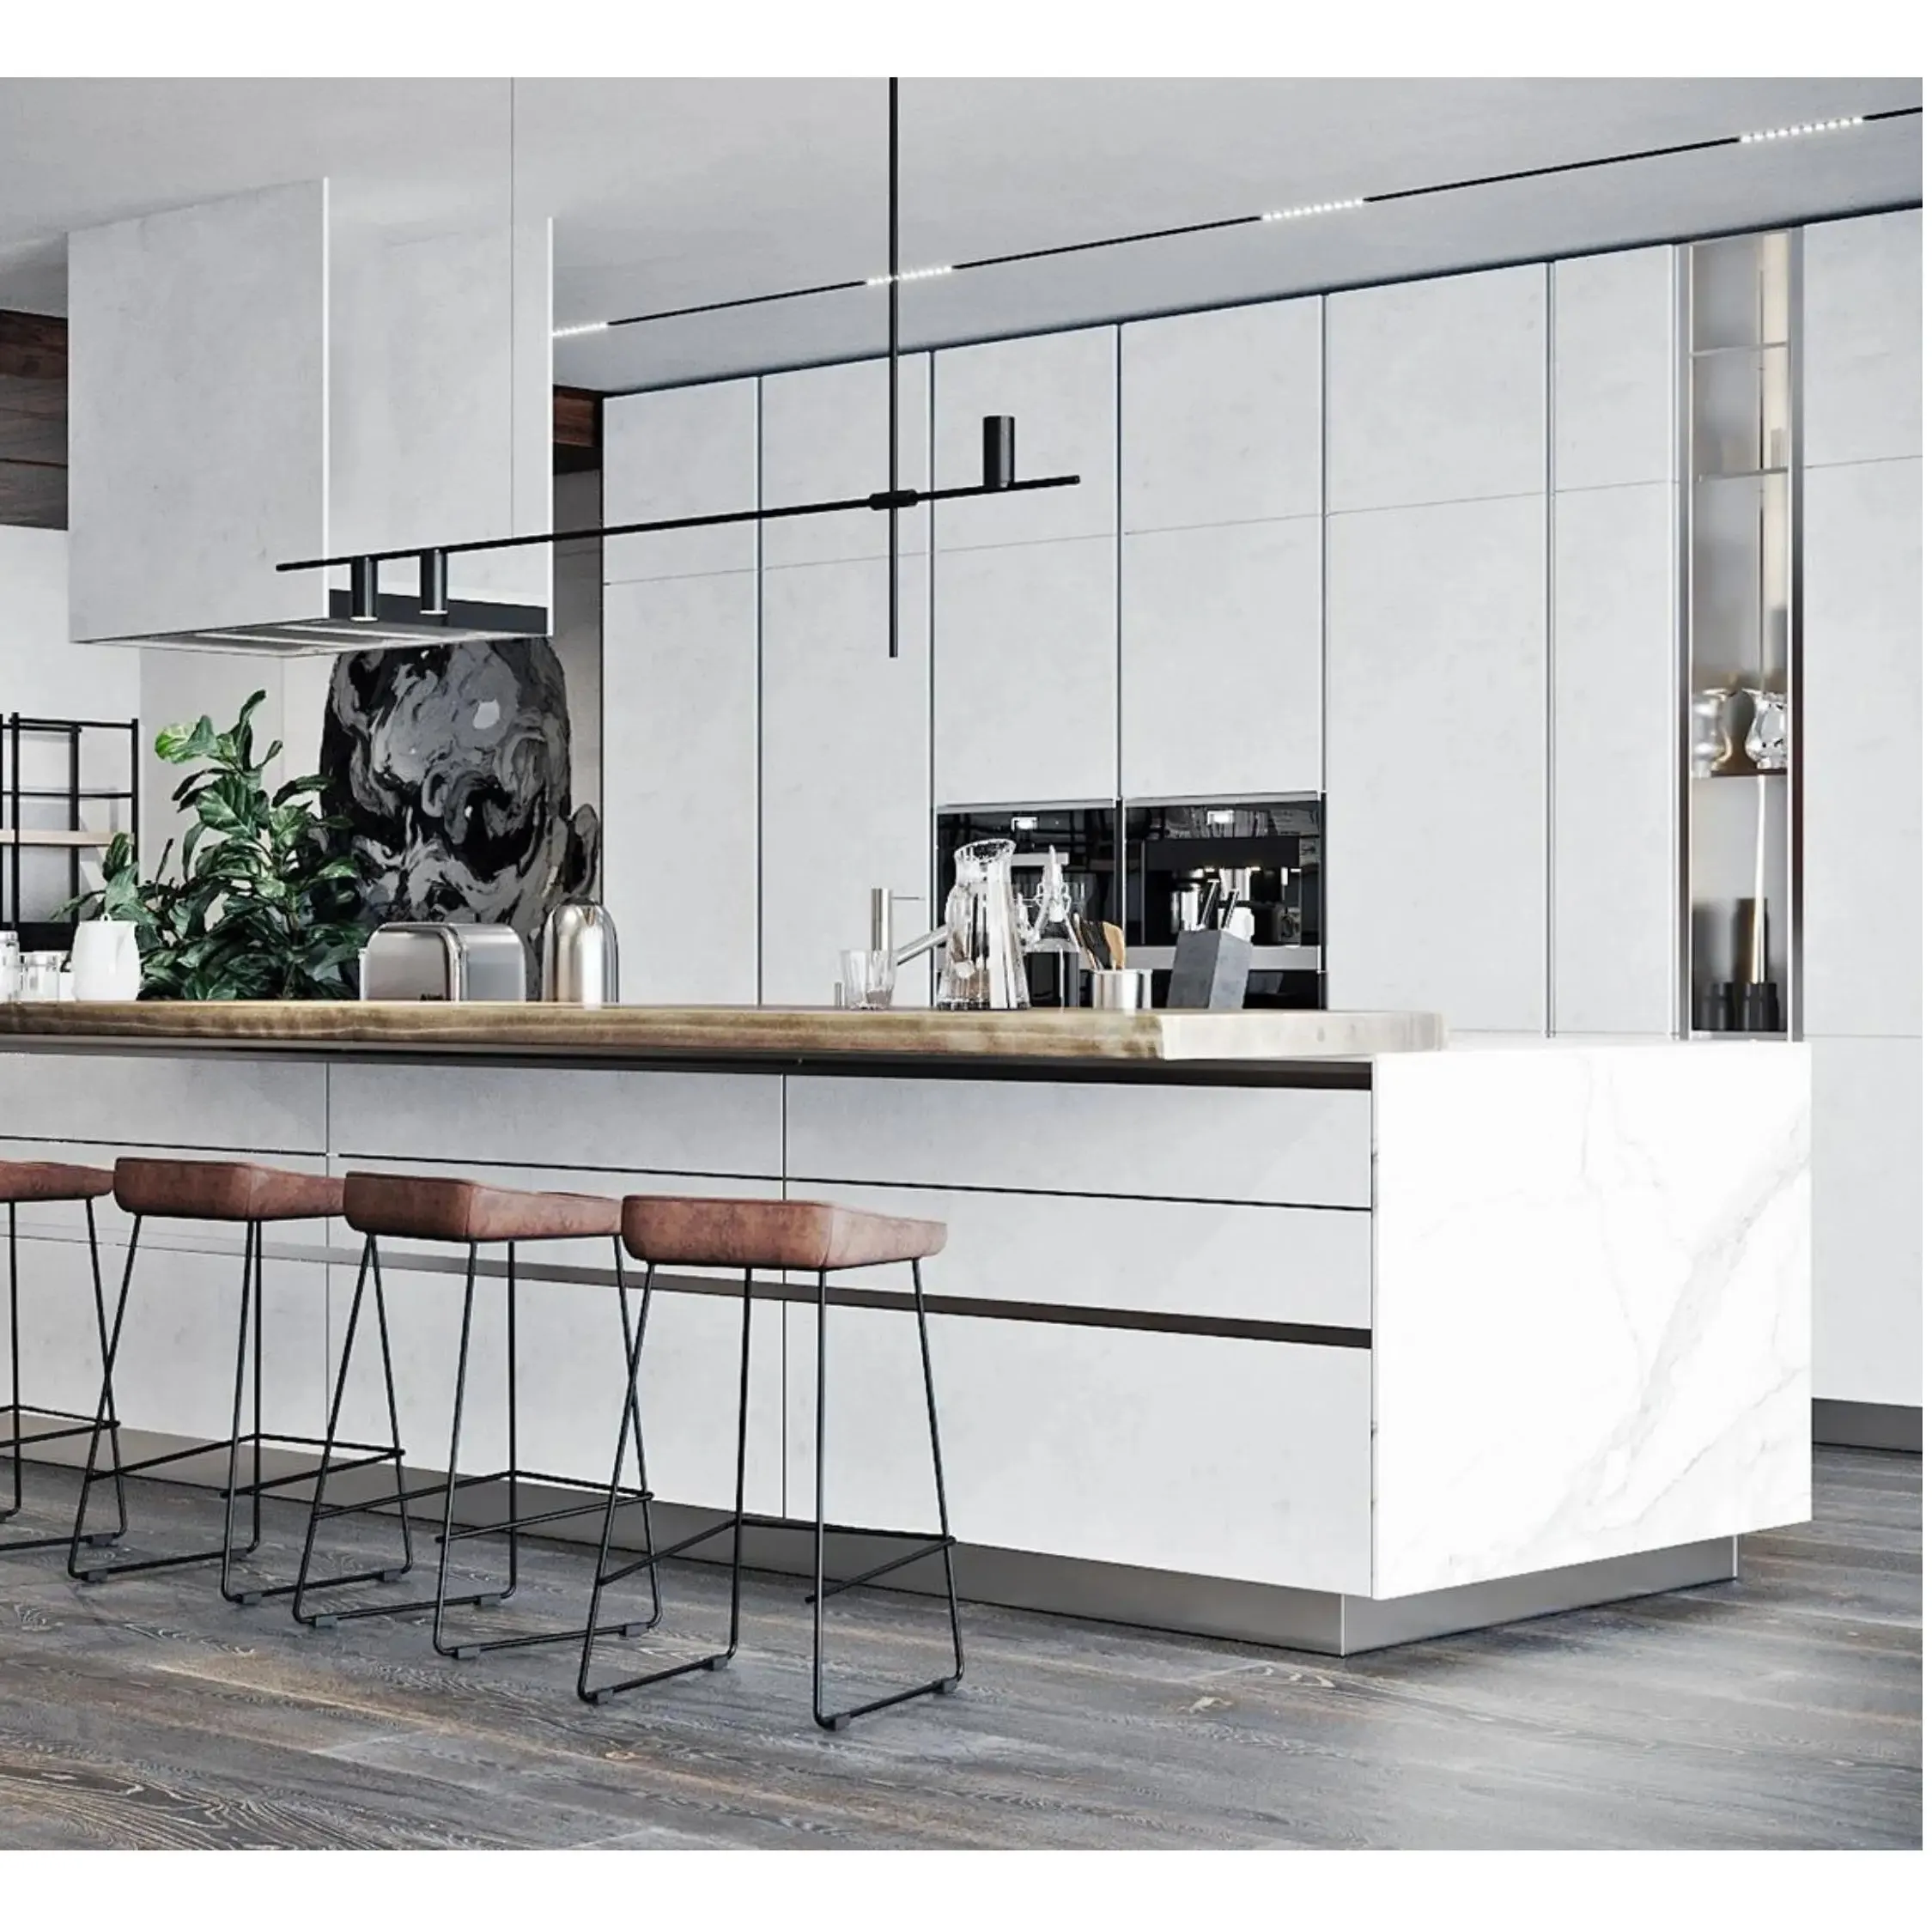 Diseños de gabinetes de cocina de aluminio Orangefun gabinetes de cocina de aluminio del sudeste asiático gabinetes de cocina con base de madera